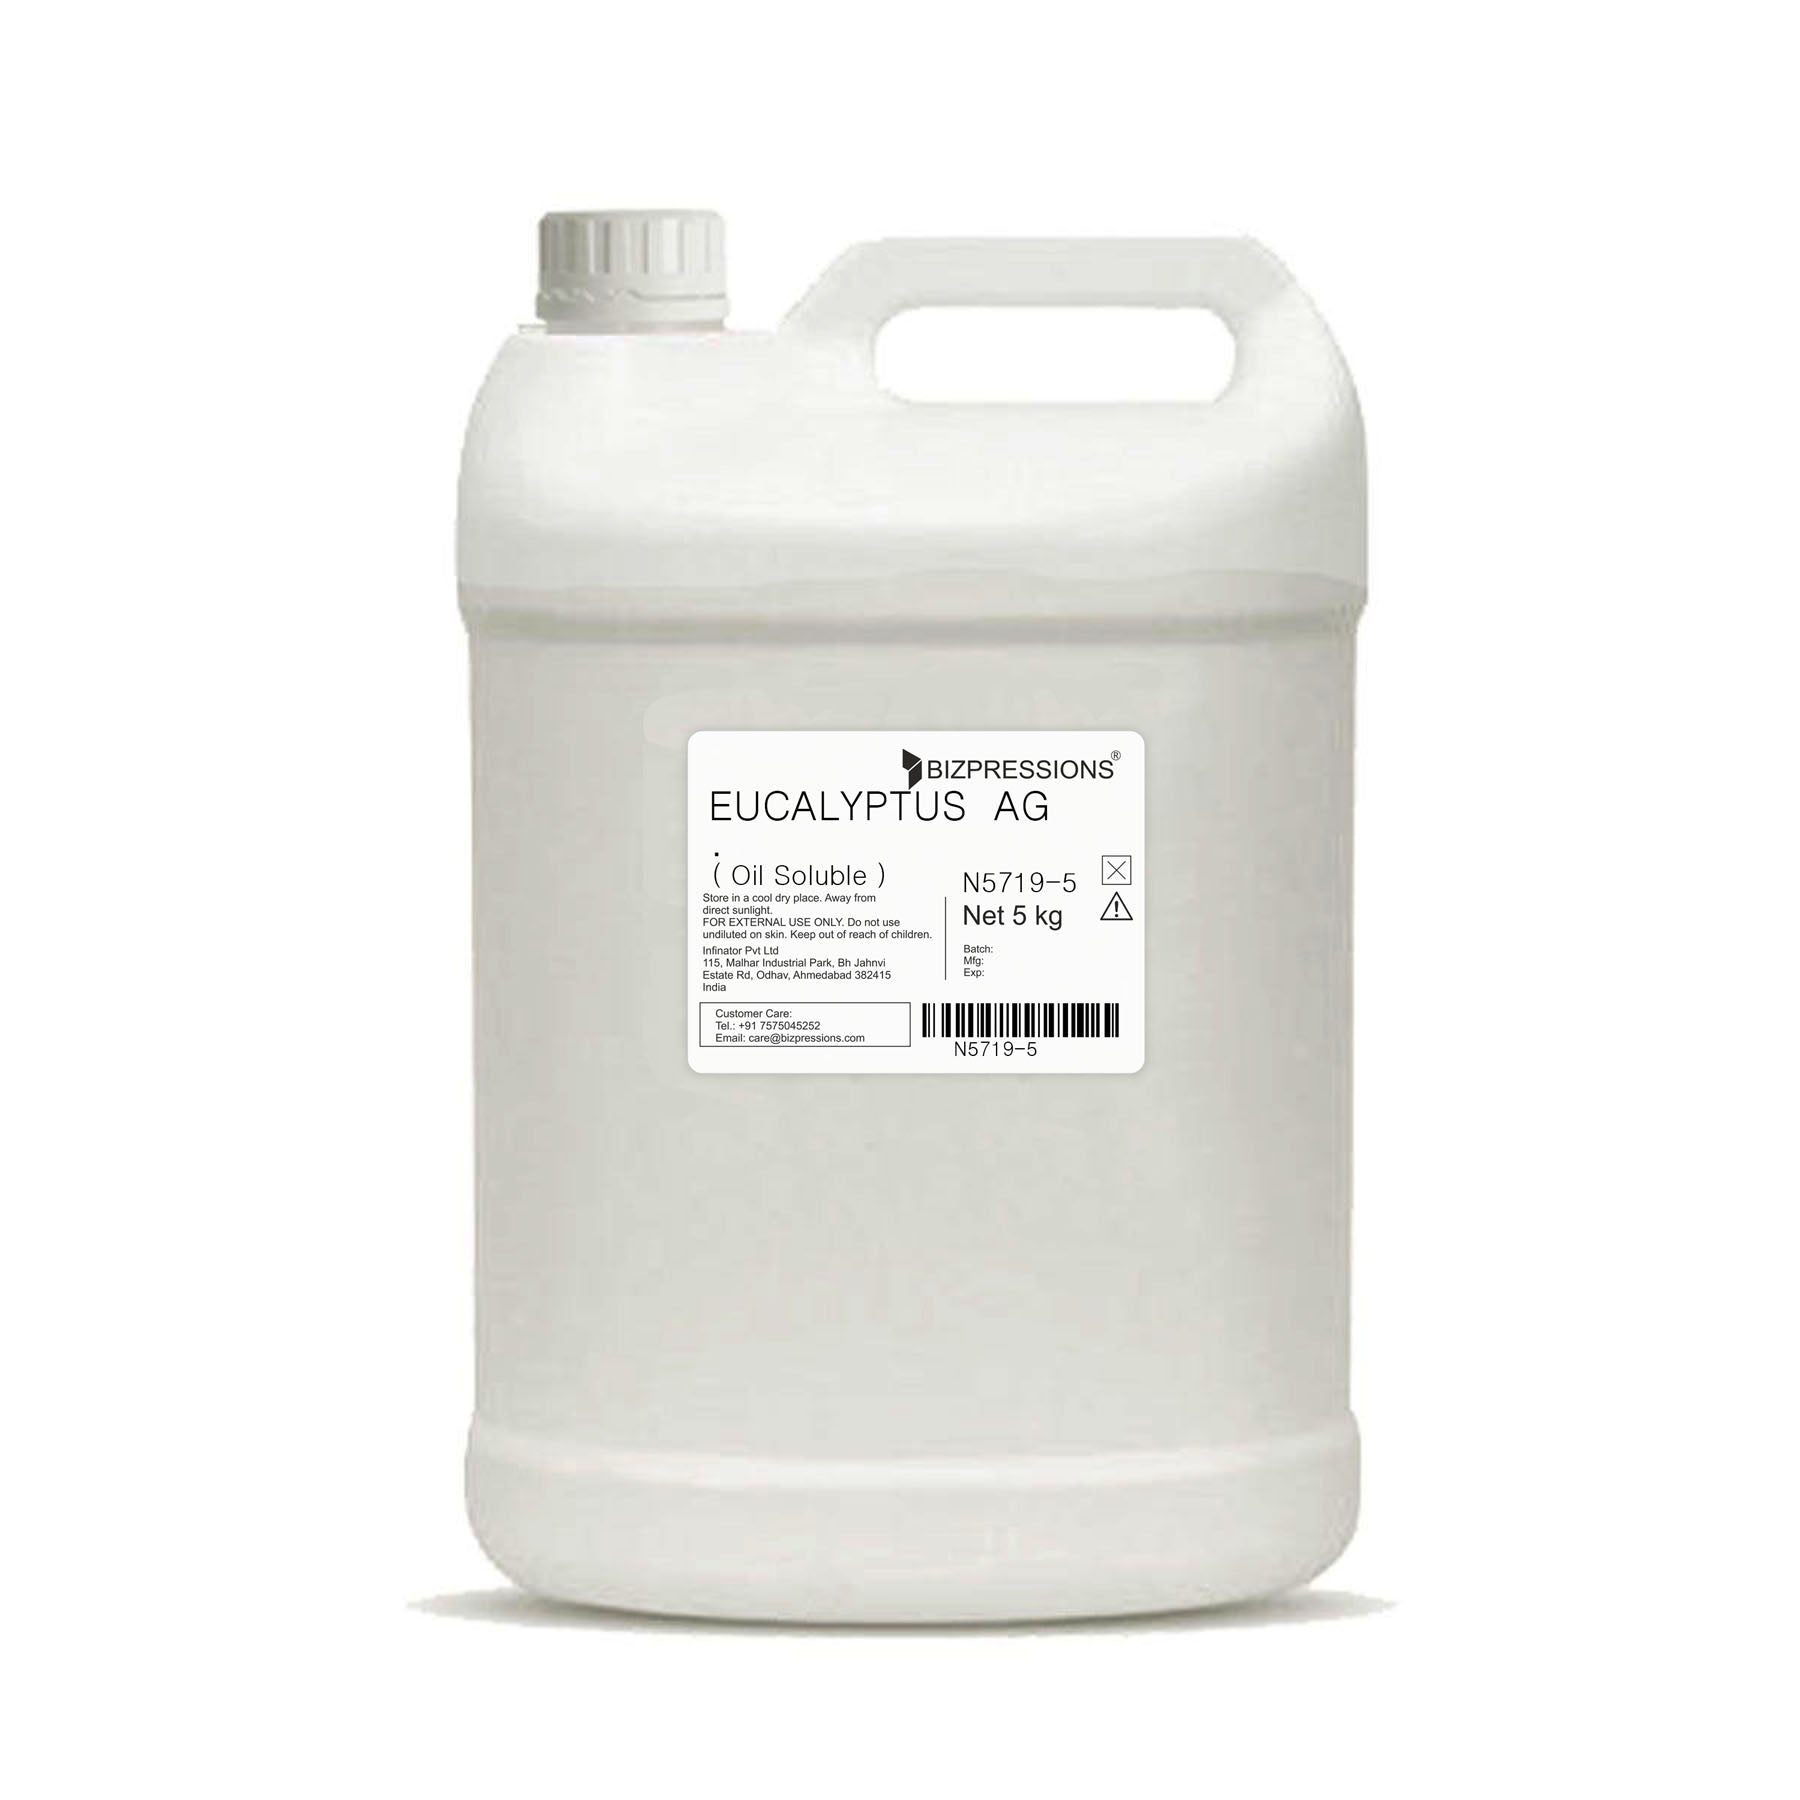 EUCALYPTUS AG. - Fragrance ( Oil Soluble ) - 5 kg